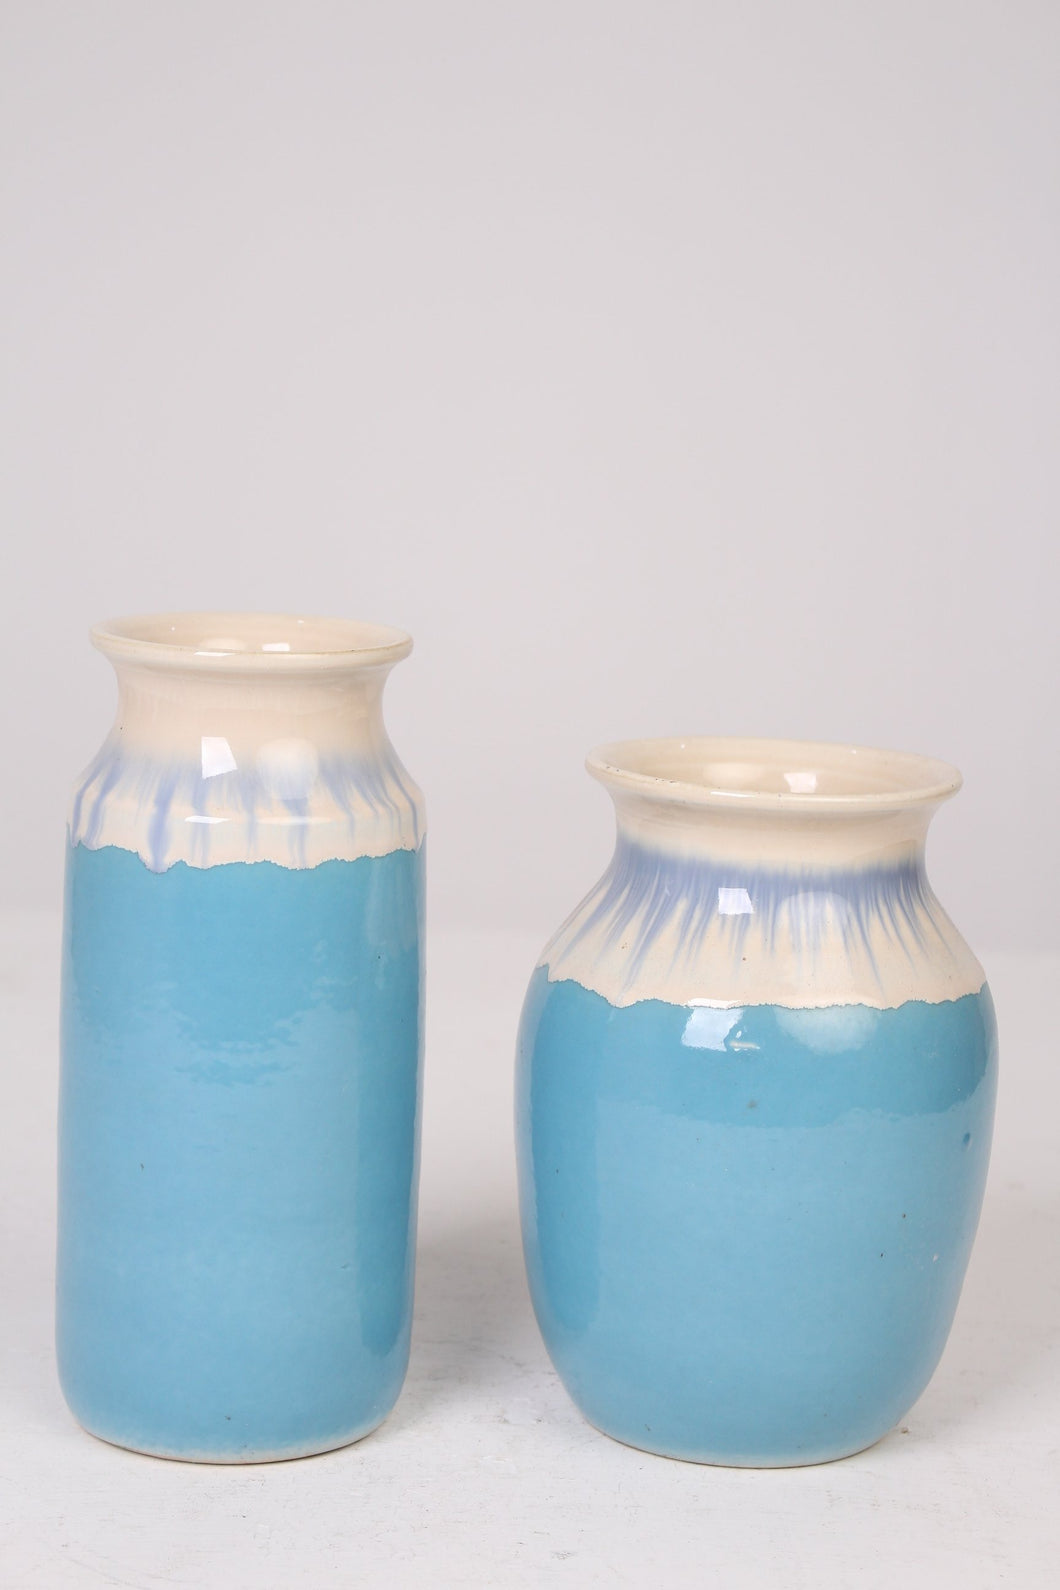 Set of 2 White & Blue glazed ceramic pots / vases 09